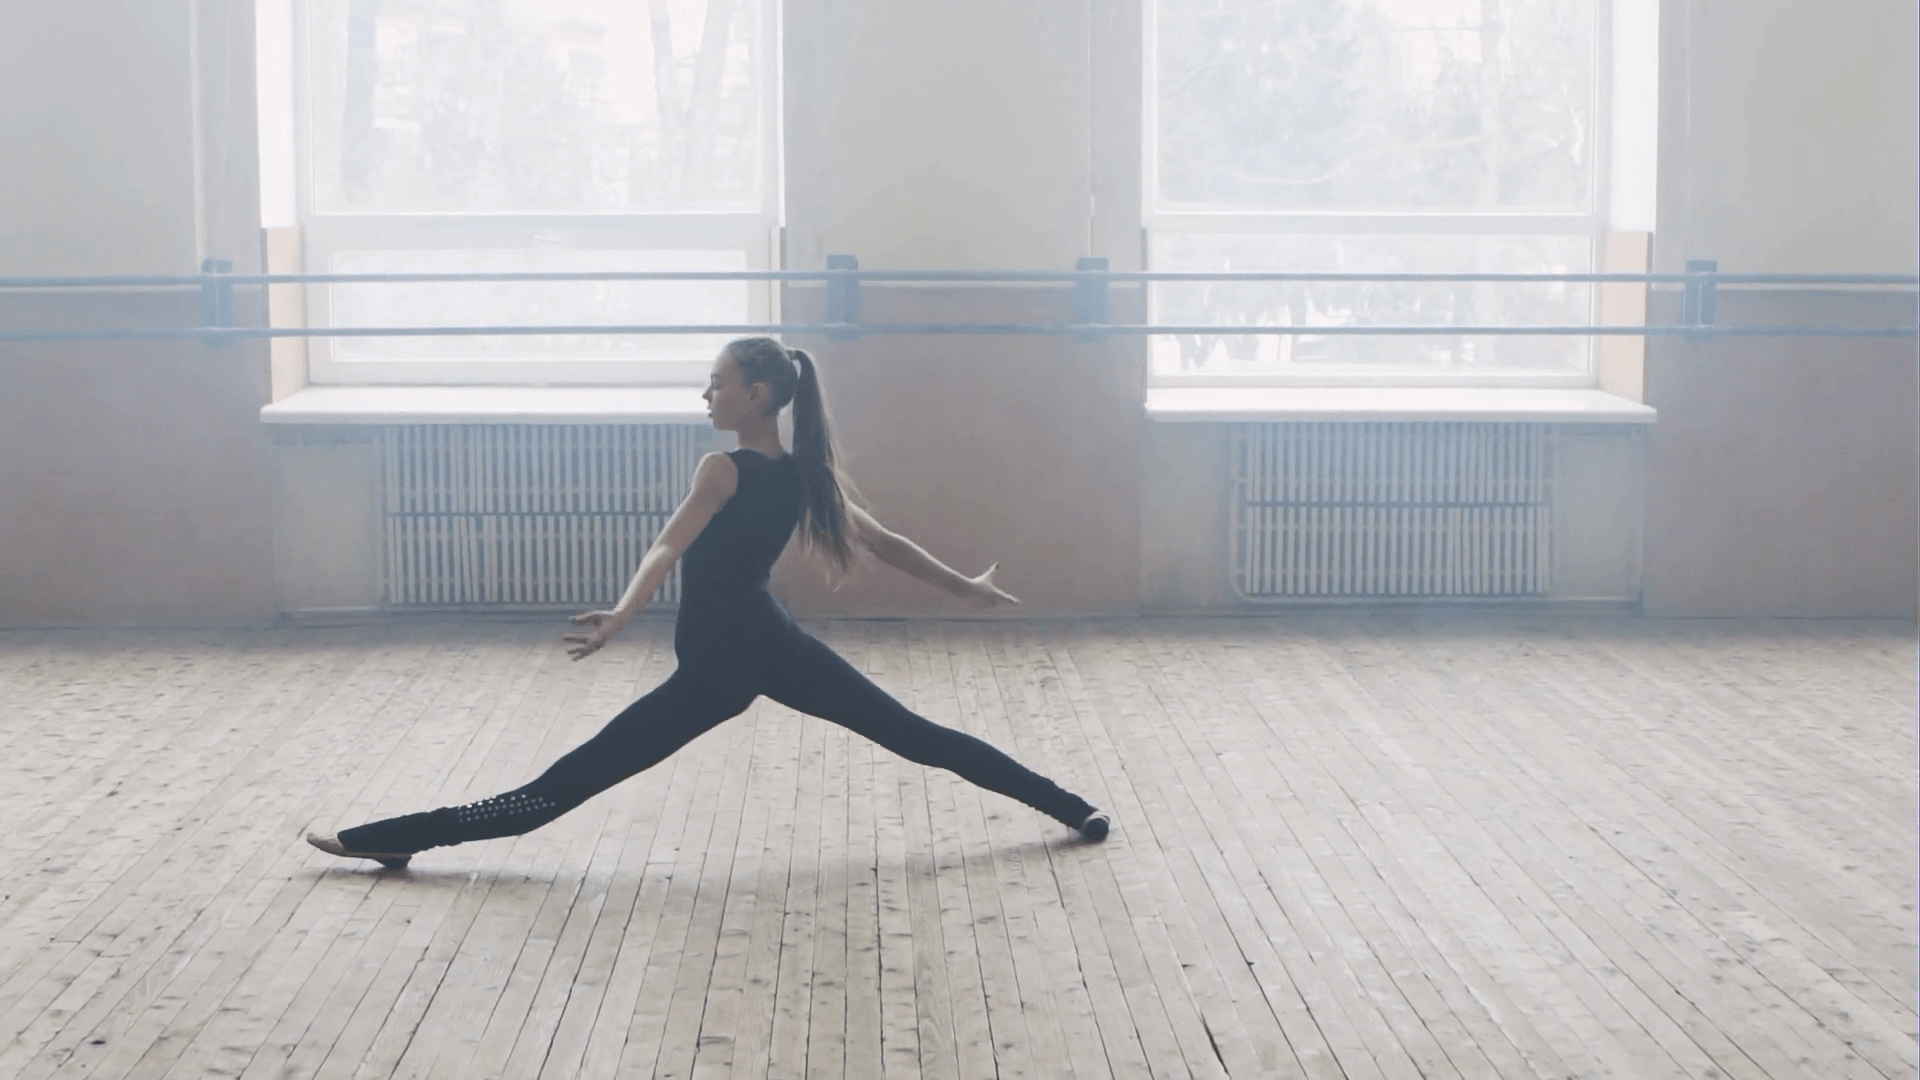 Ballet, dancer posing in fitness center, studio mirror background Stock Video Footage